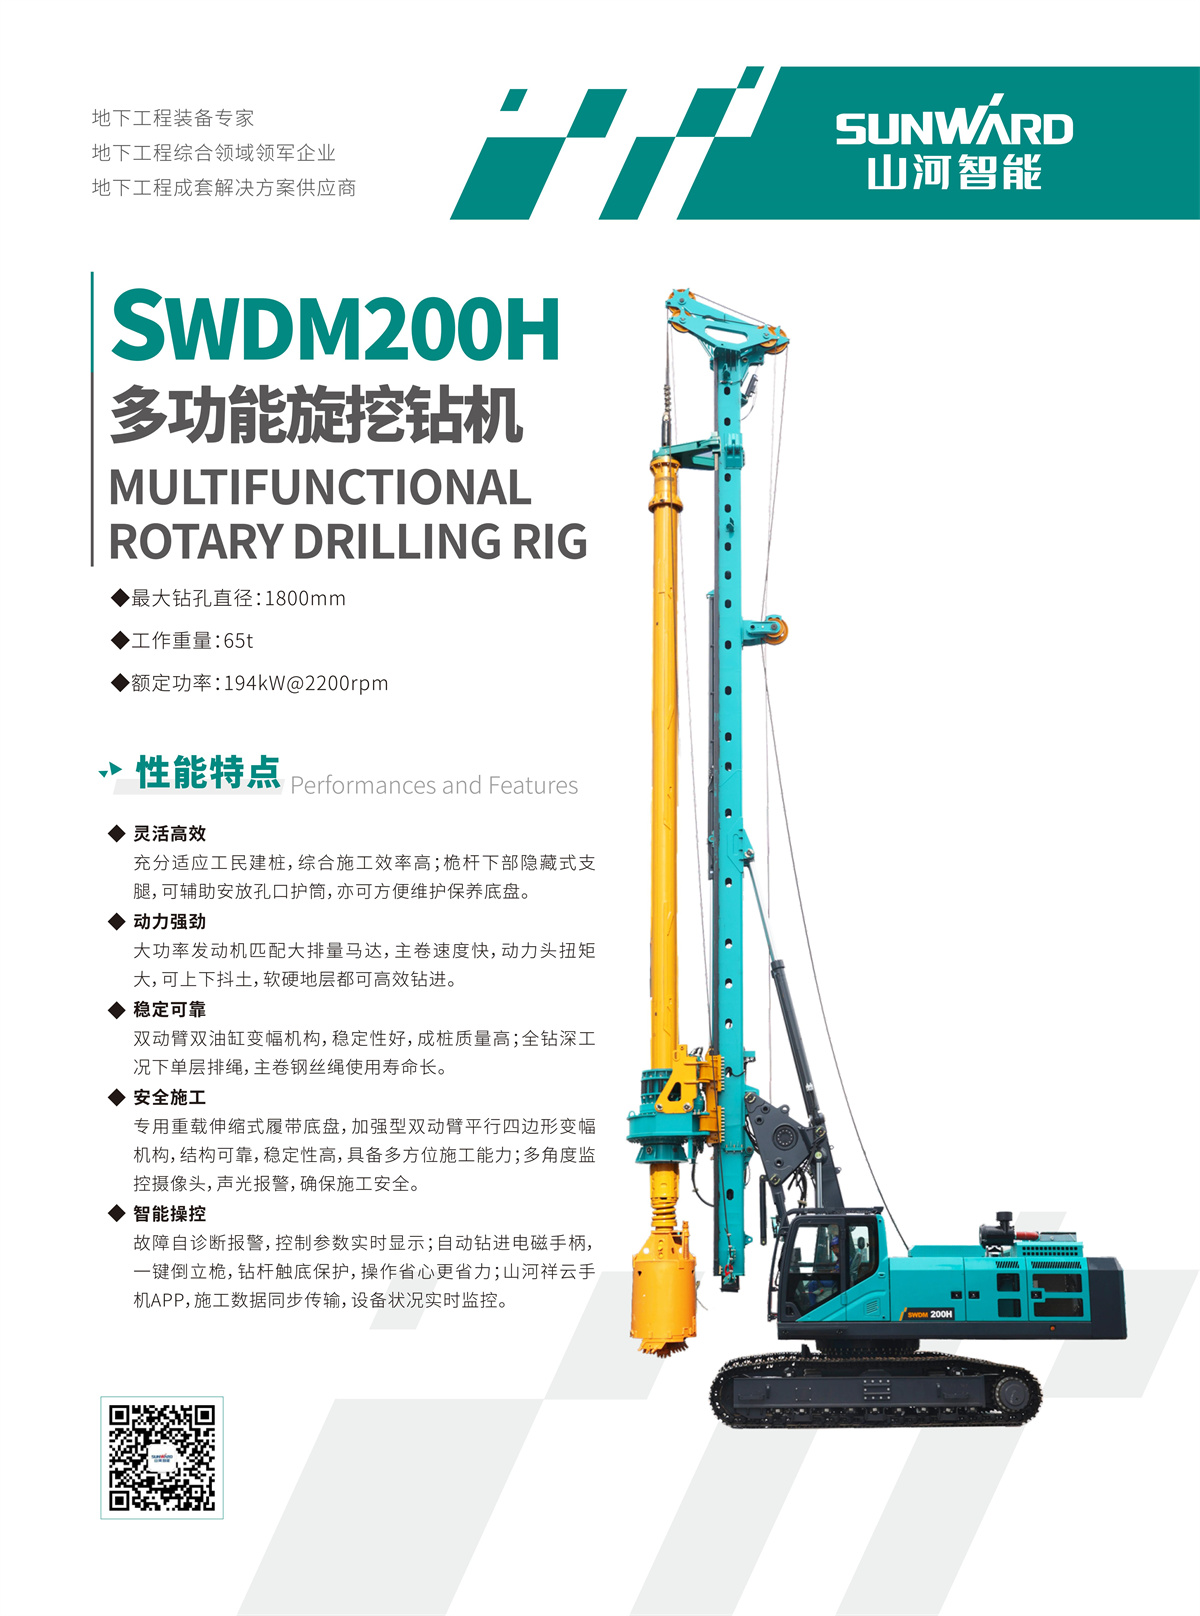 SWDM200H 中型多功能旋挖钻机